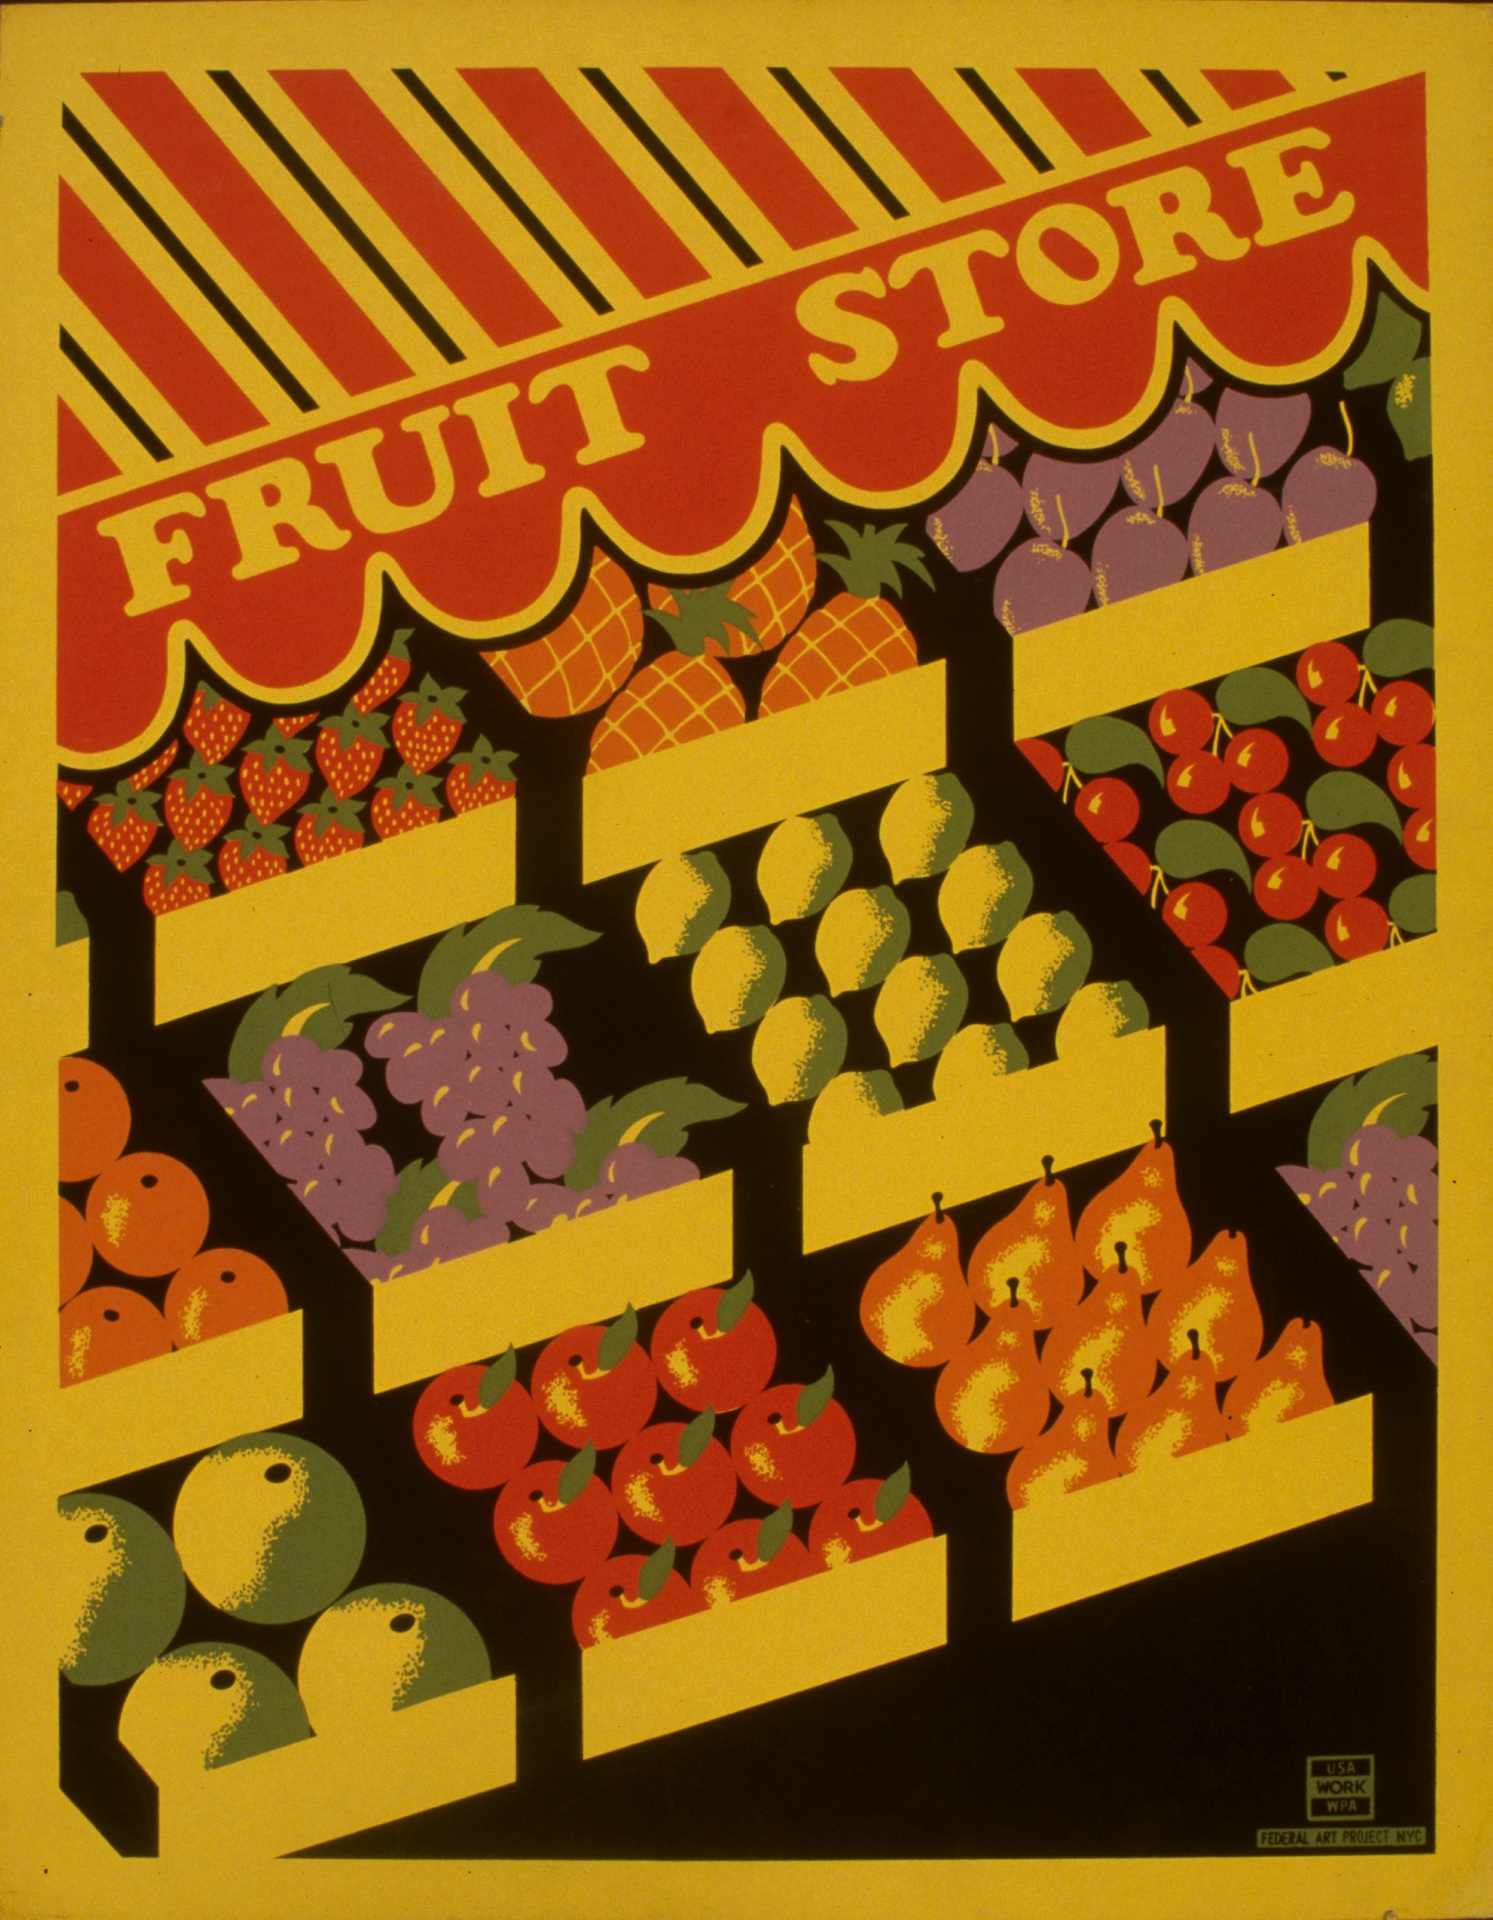 Vintage Fruit Store Poster